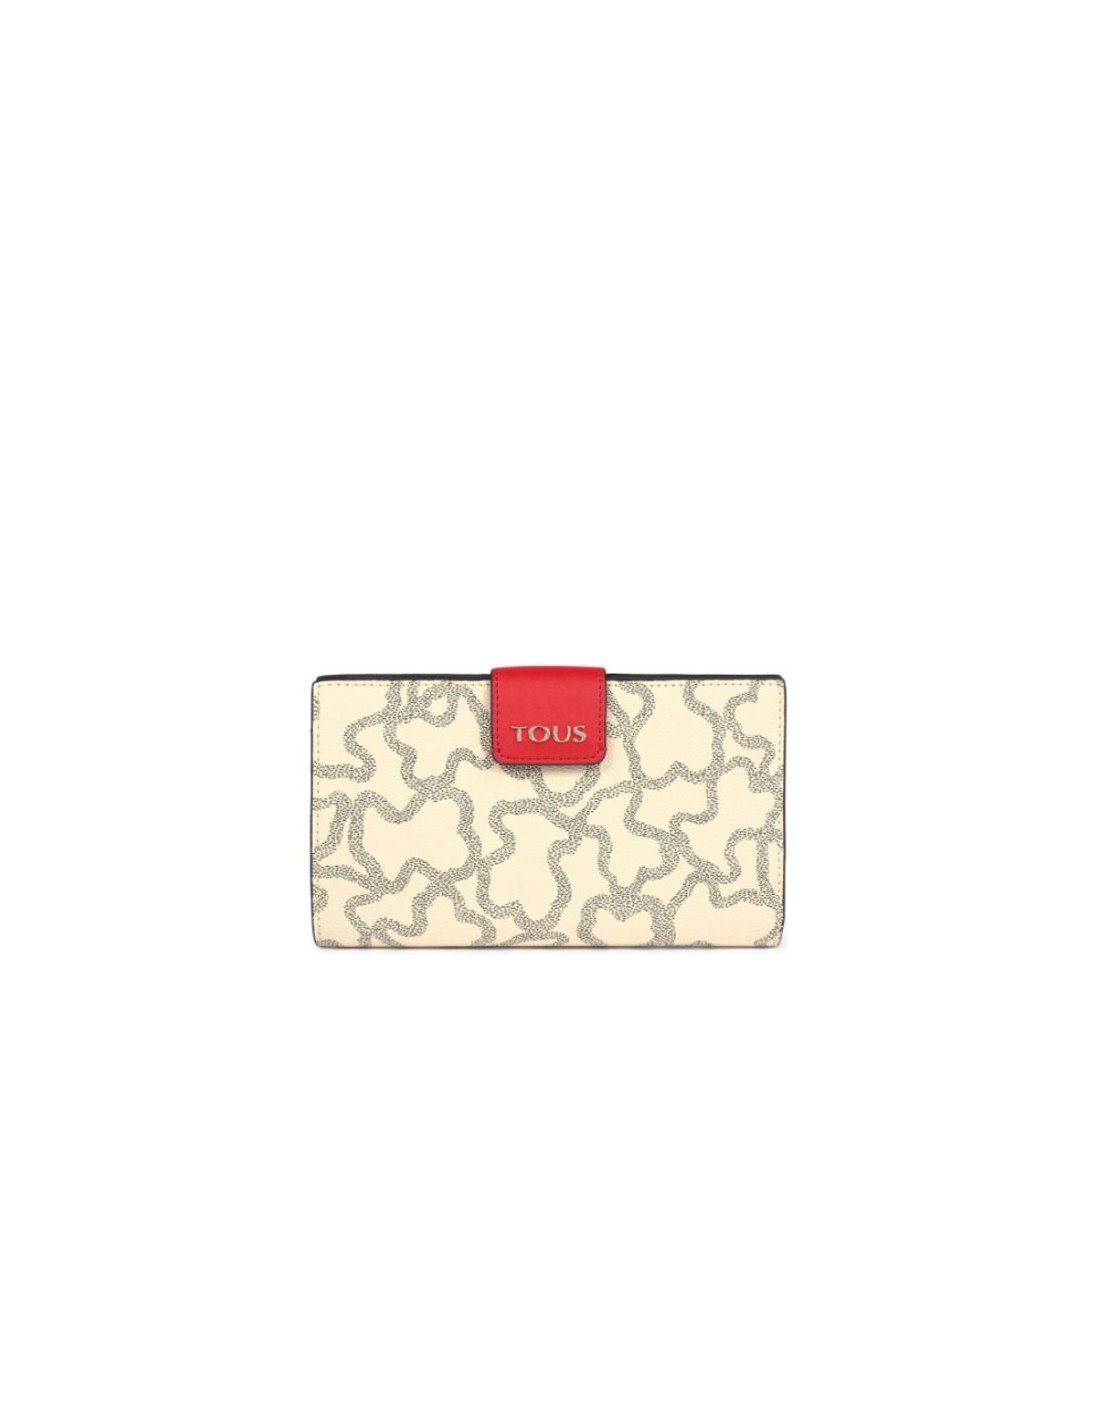 Tous Flat Wallet Kaos Icon Multi Beige-Red, latest offers on Tous Moda  fashion accessories